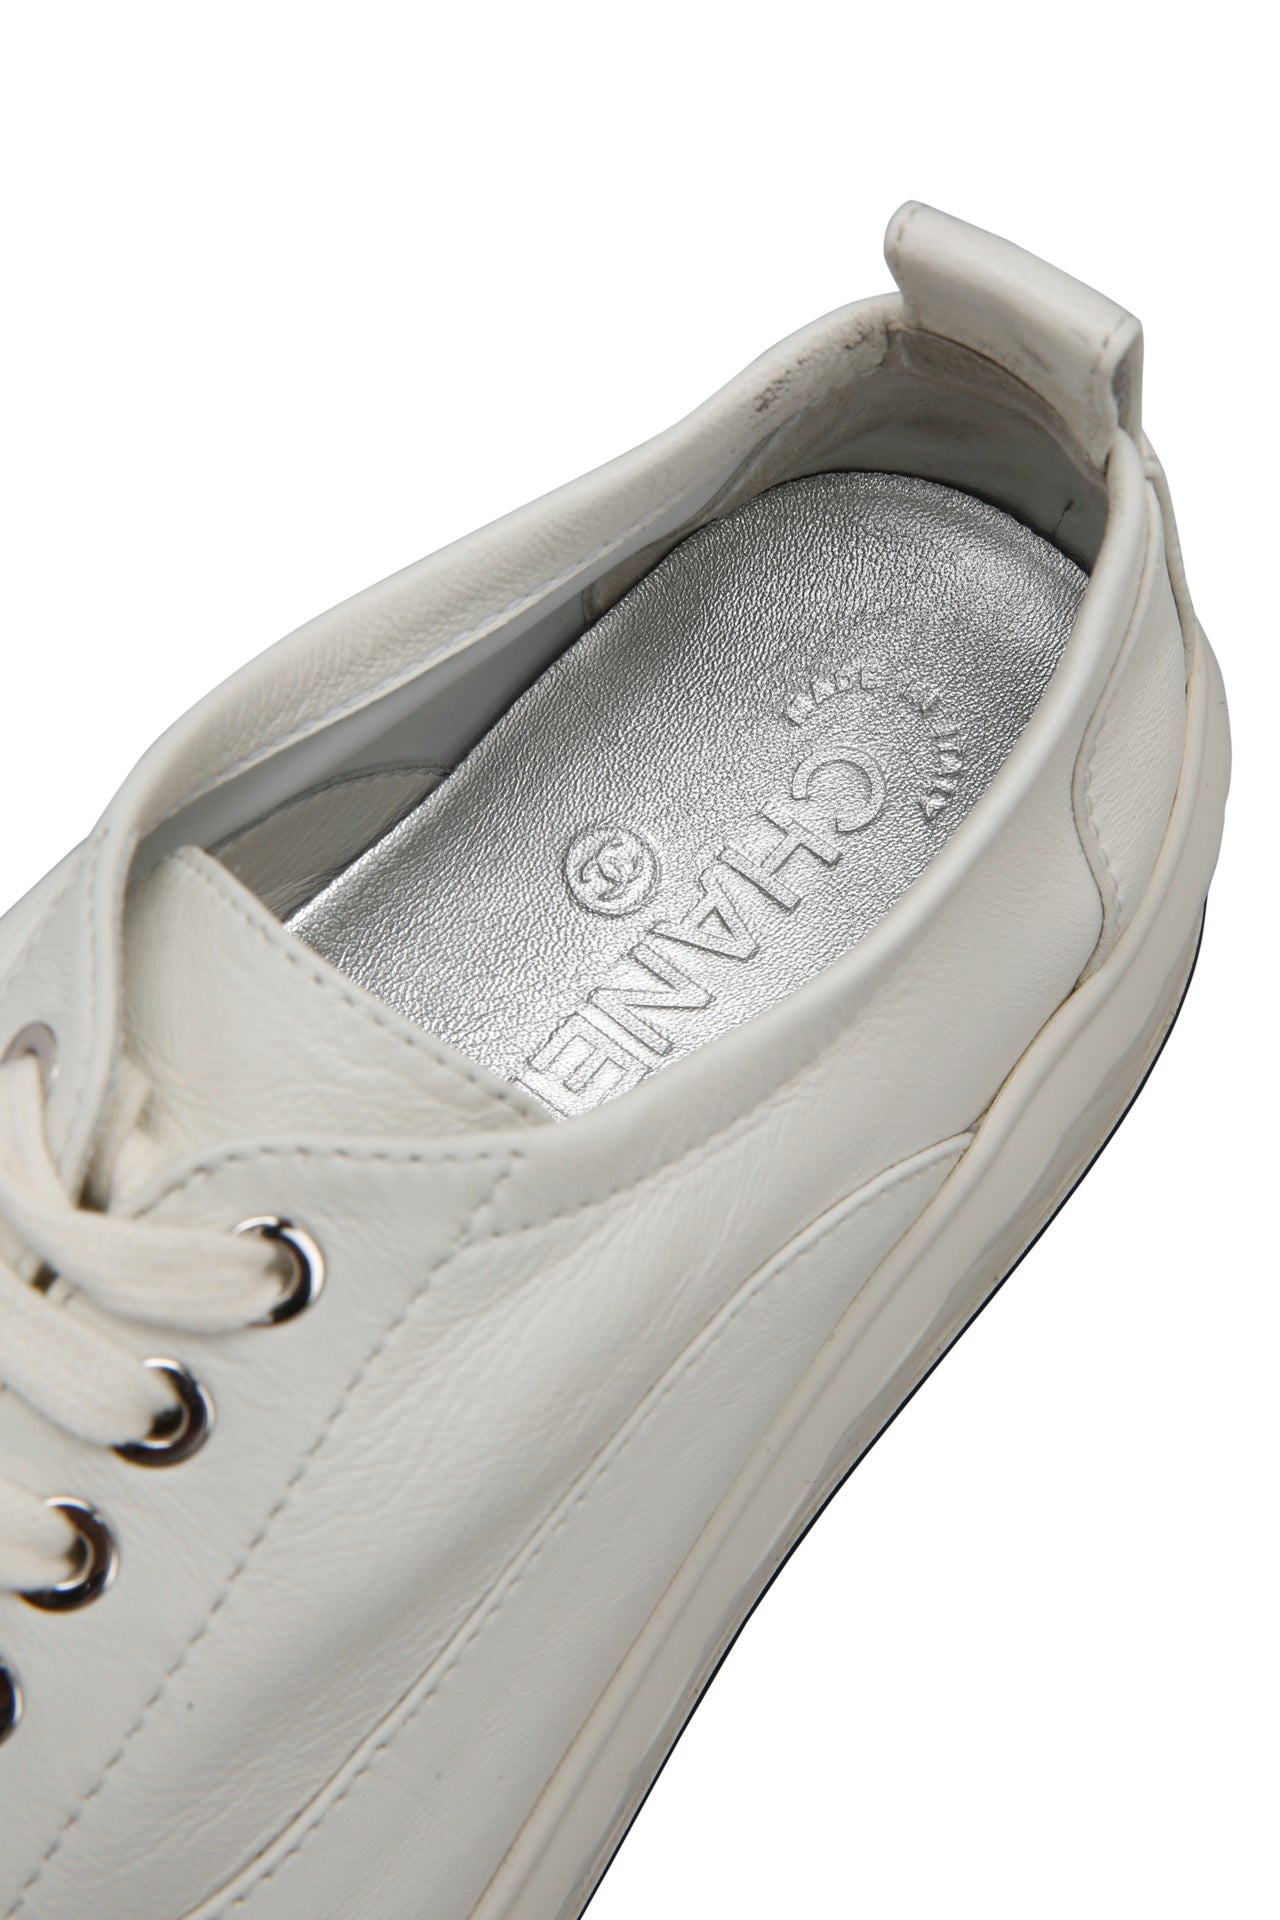 Chanel Interlocking CC Logo Leather Chunky Sneakers